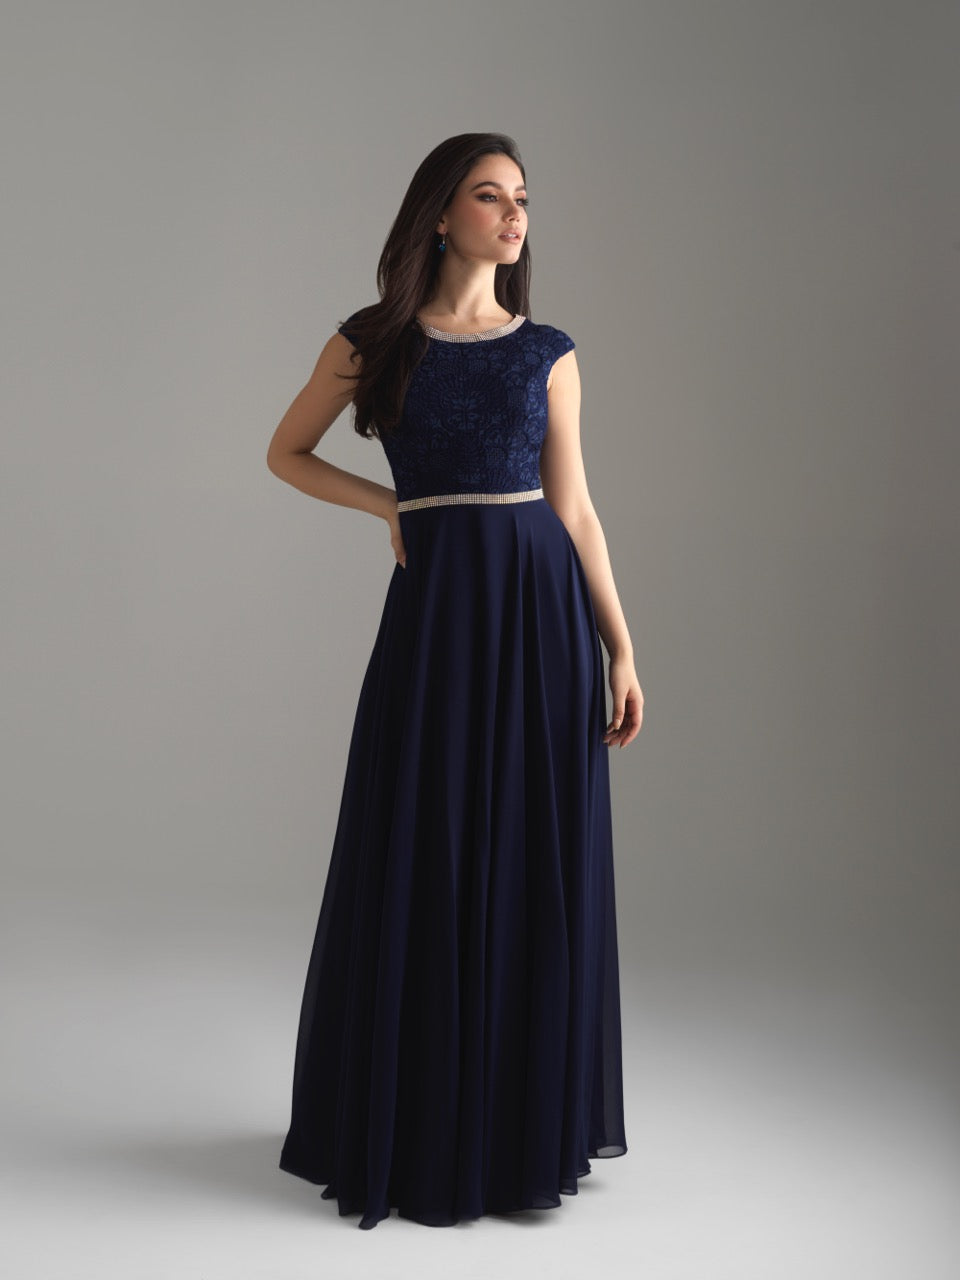 Allure 18 802 Modest Prom  Dress  A Closet Full of Dresses 